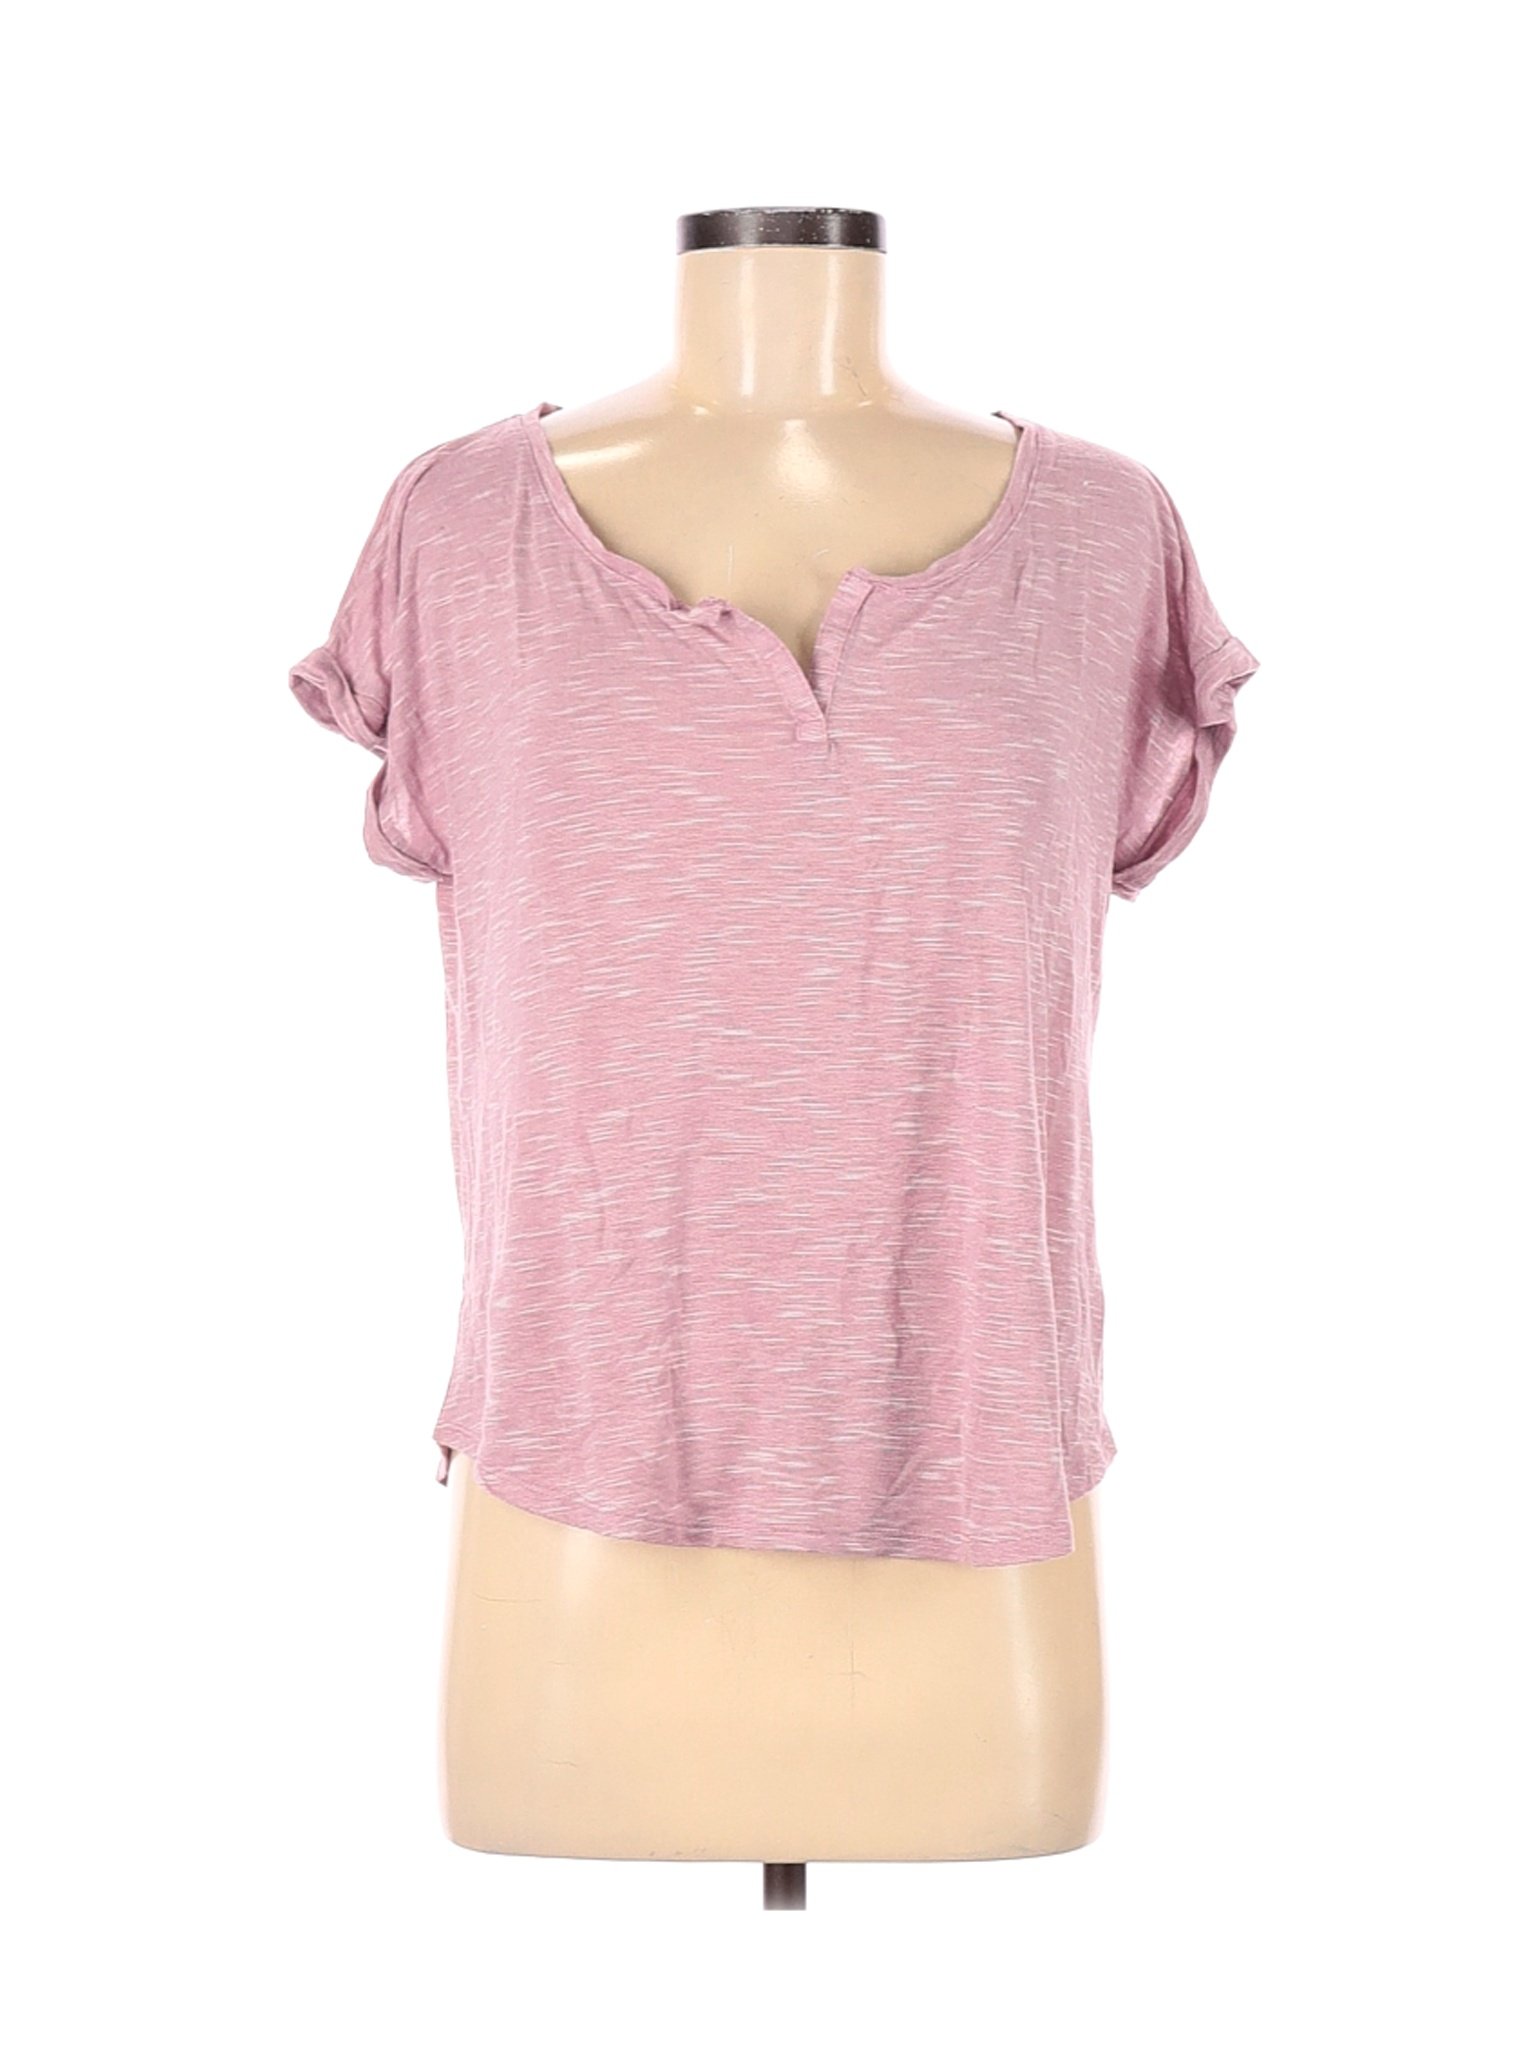 Soho JEANS NEW YORK & COMPANY Women Pink Short Sleeve T-Shirt M | eBay